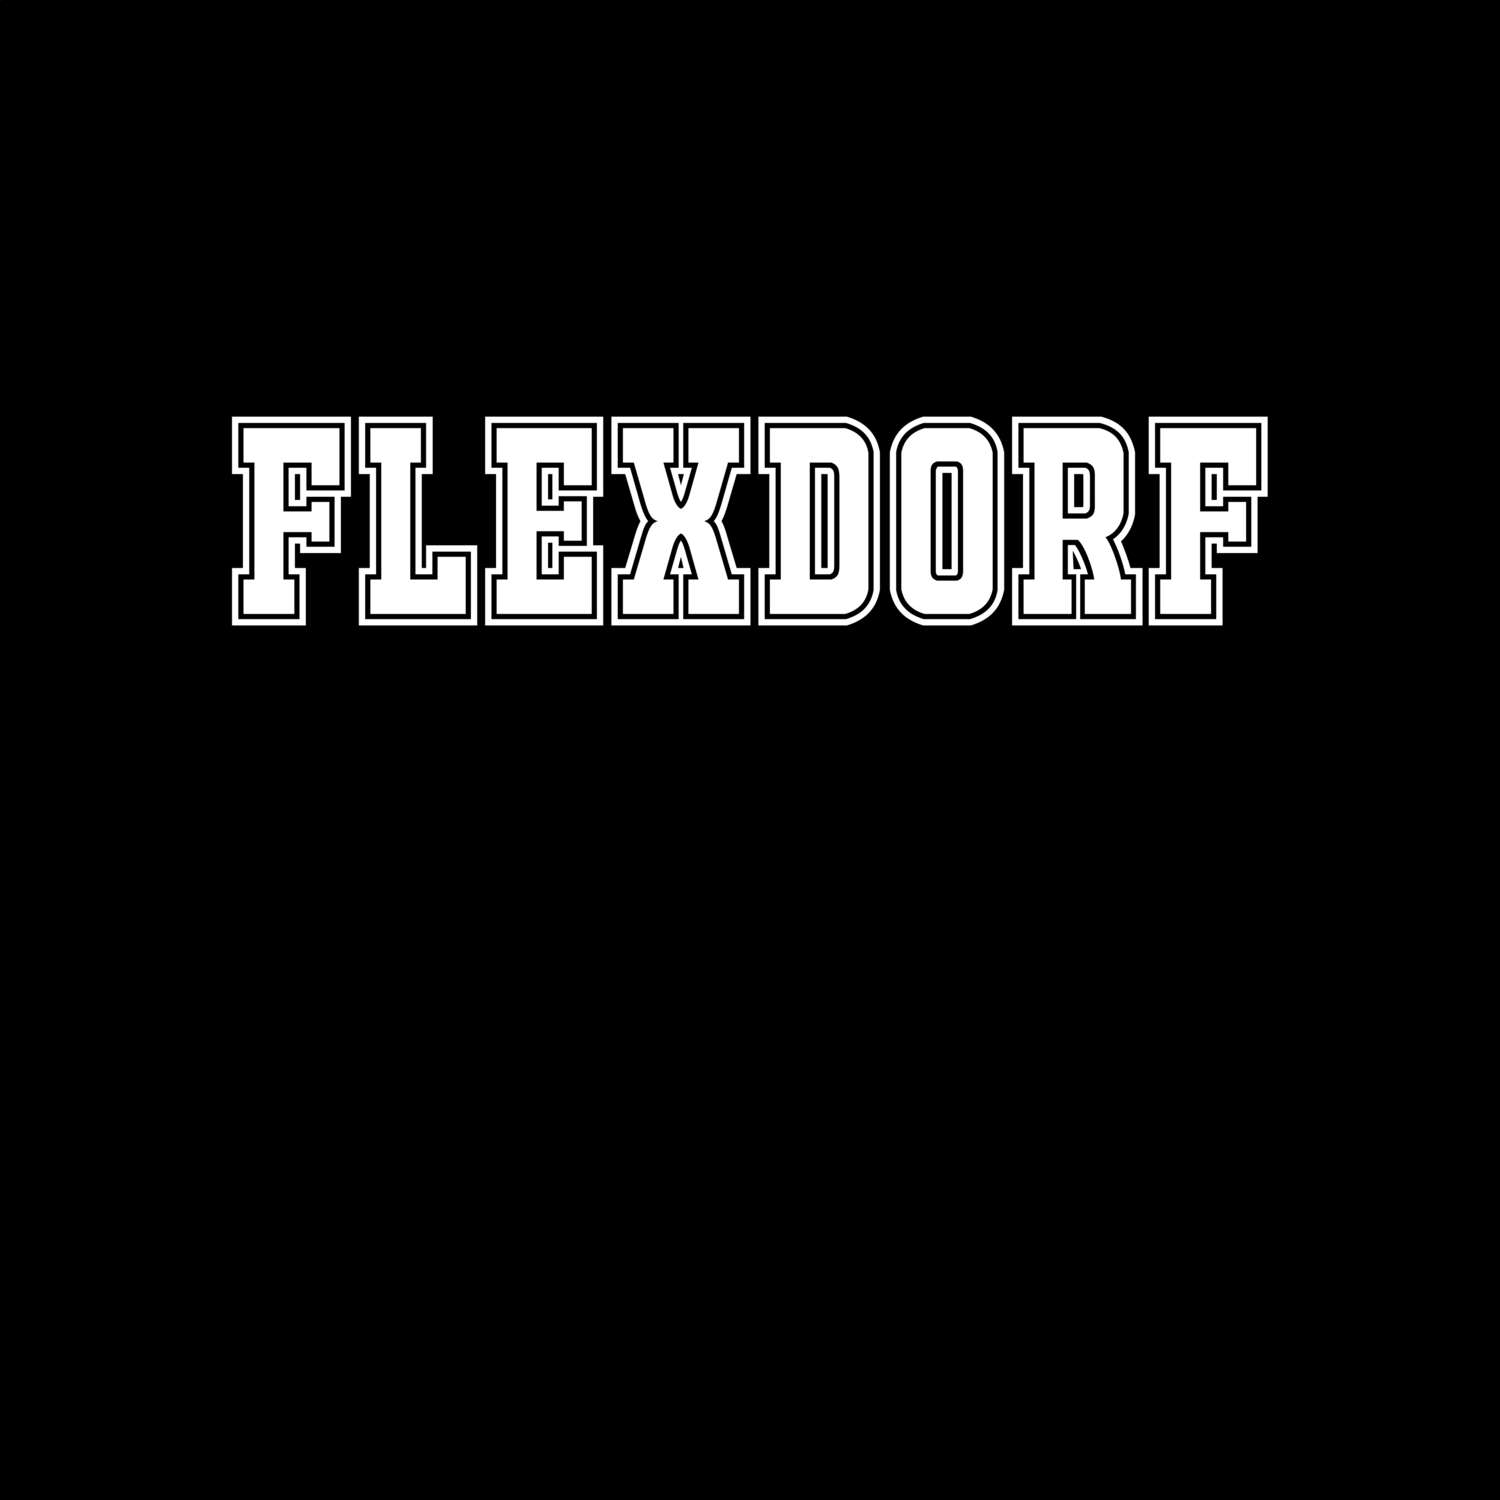 Flexdorf T-Shirt »Classic«